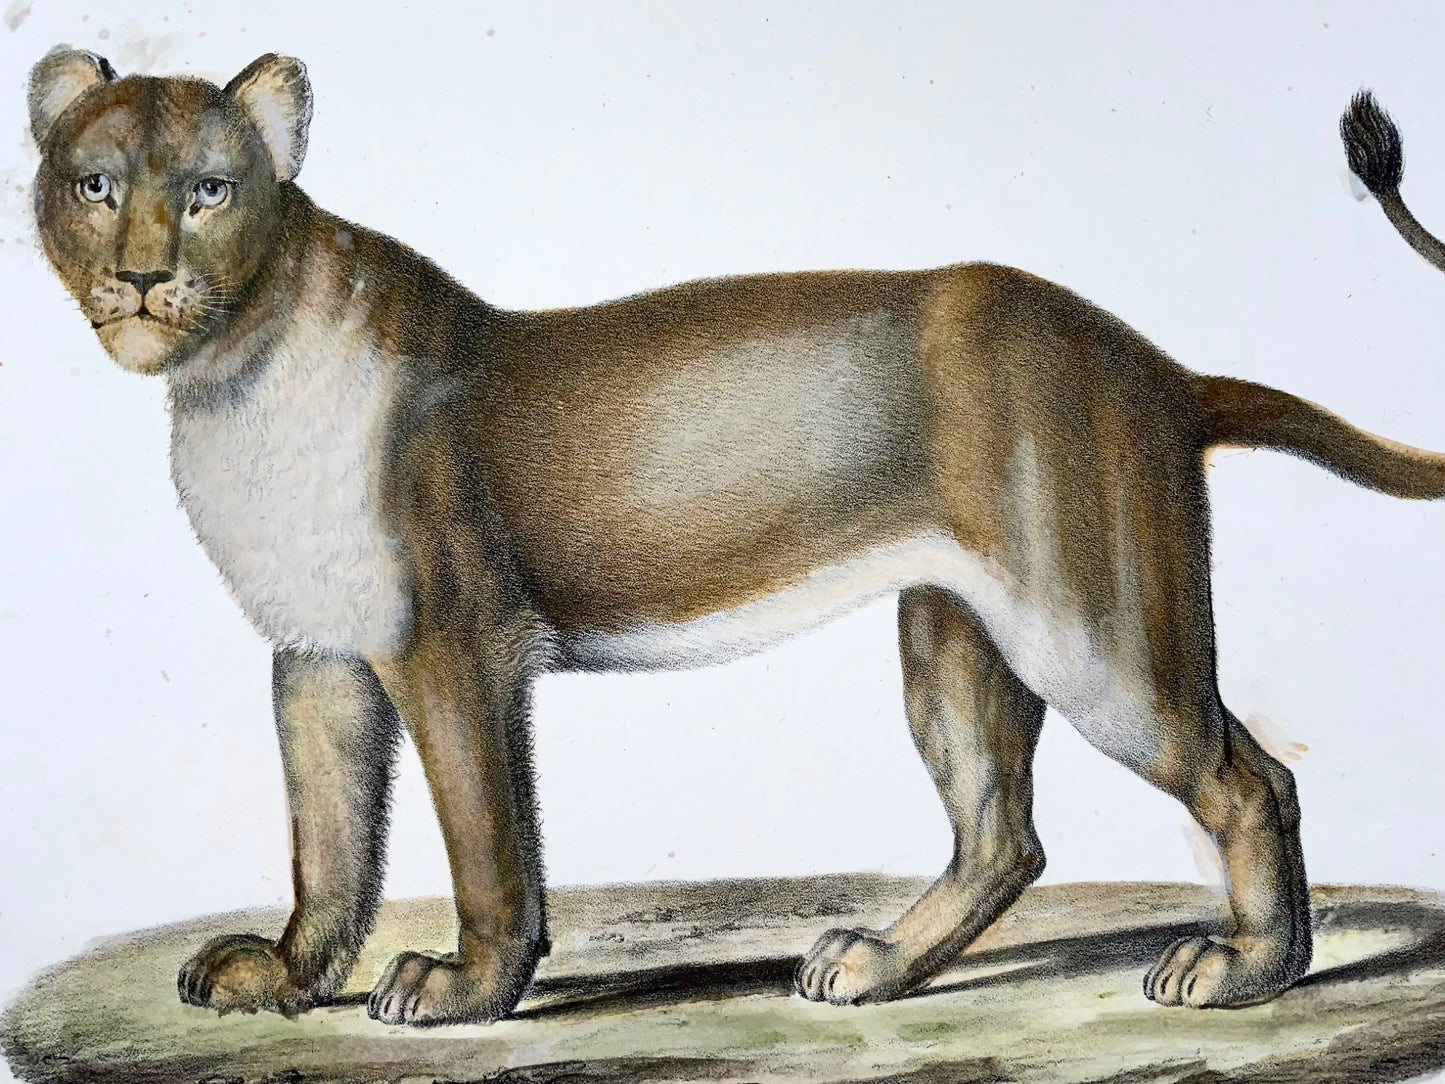 1824 Barbary Lion - K.J. Brodtmann ORIGINAL hand colored FOLIO stone lithography - Mammal